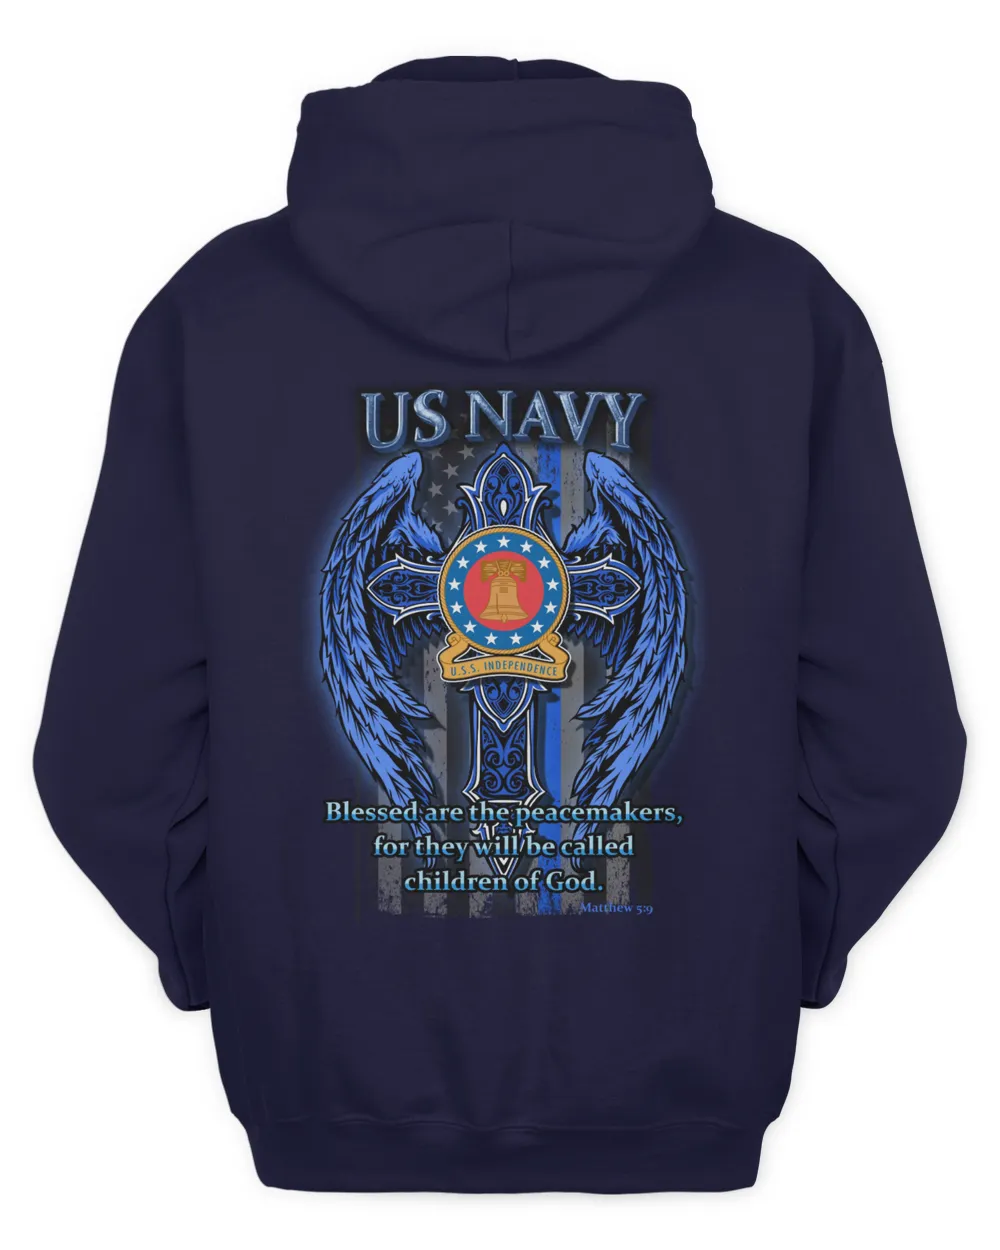 USS Independence (CV-62)